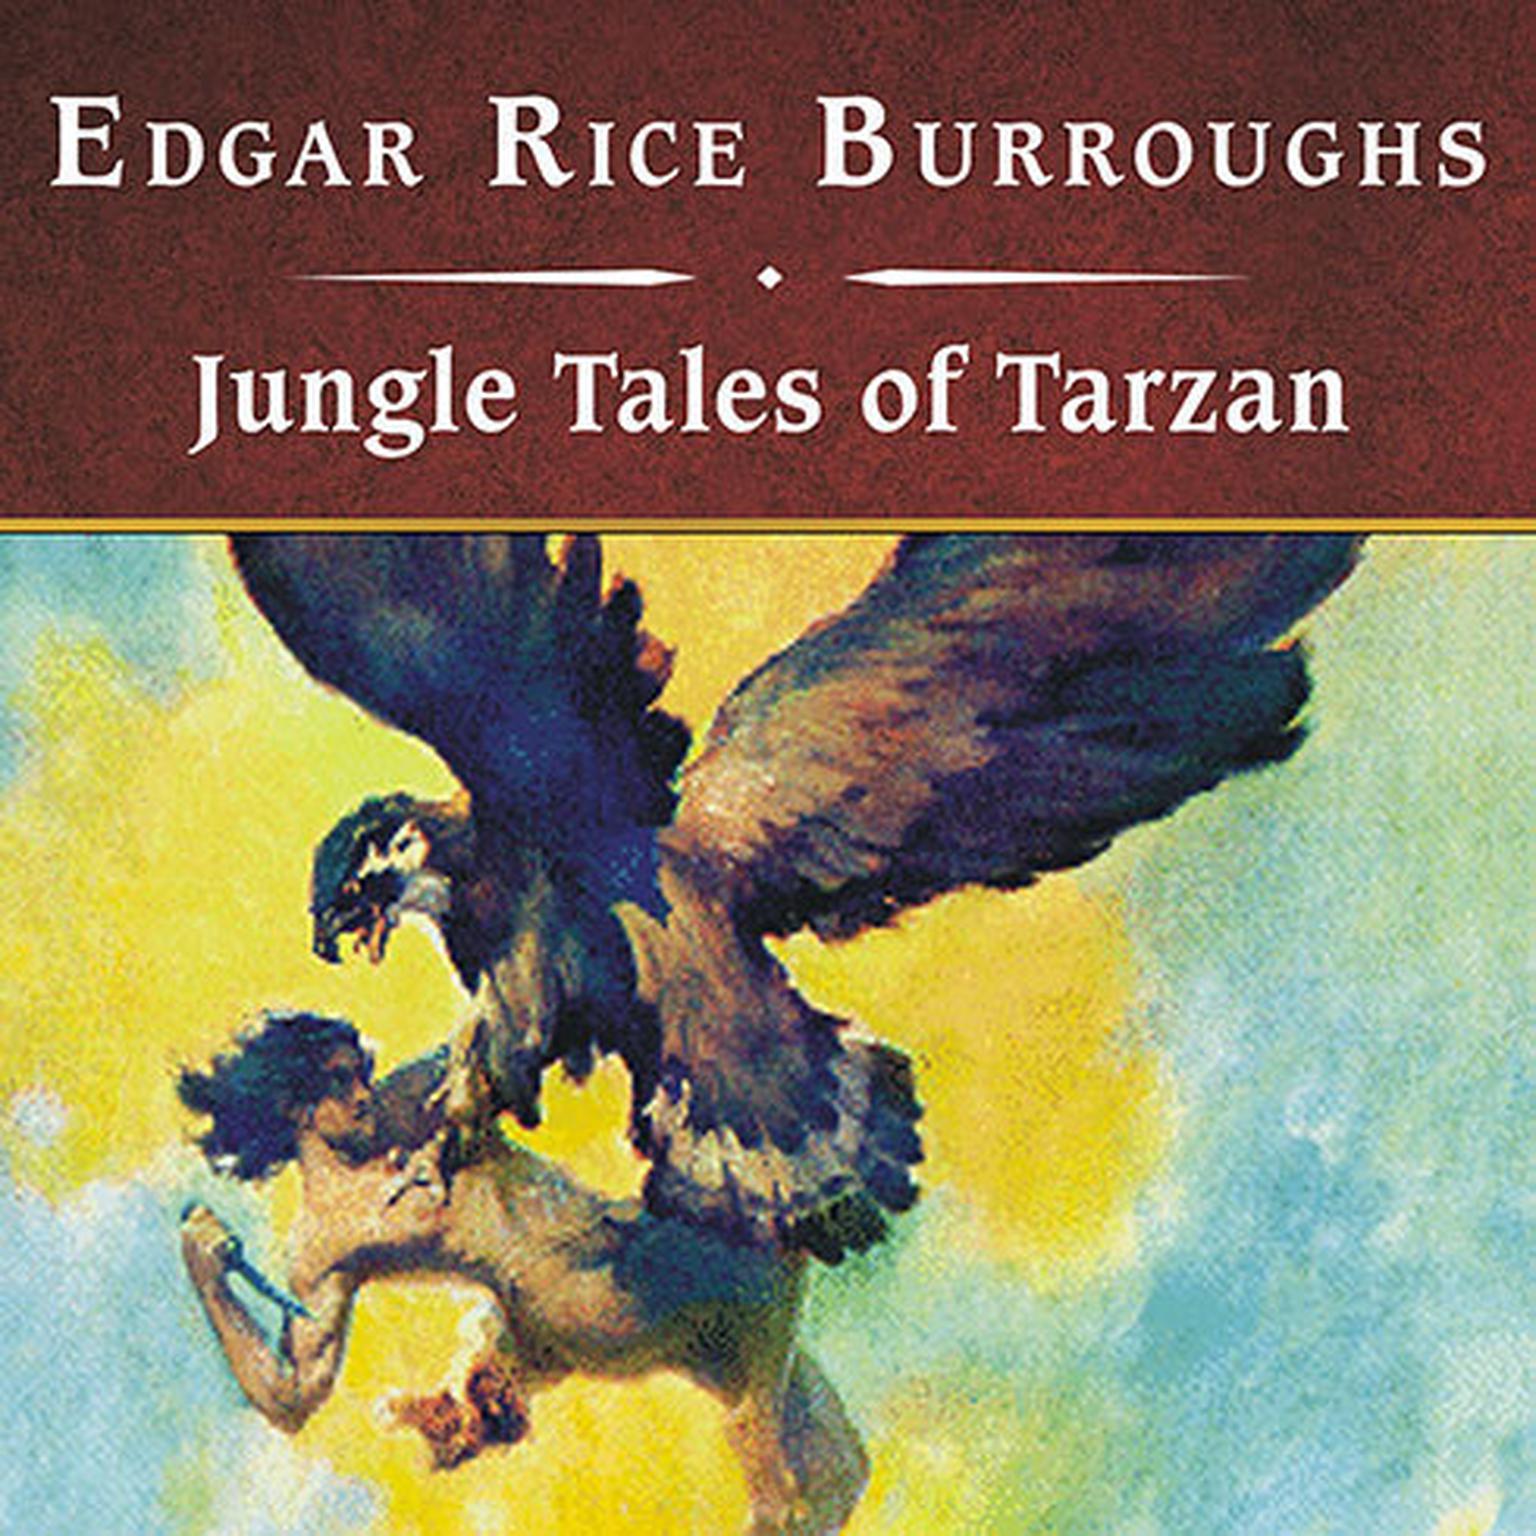 Jungle Tales of Tarzan, with eBook Audiobook, by Edgar Rice Burroughs